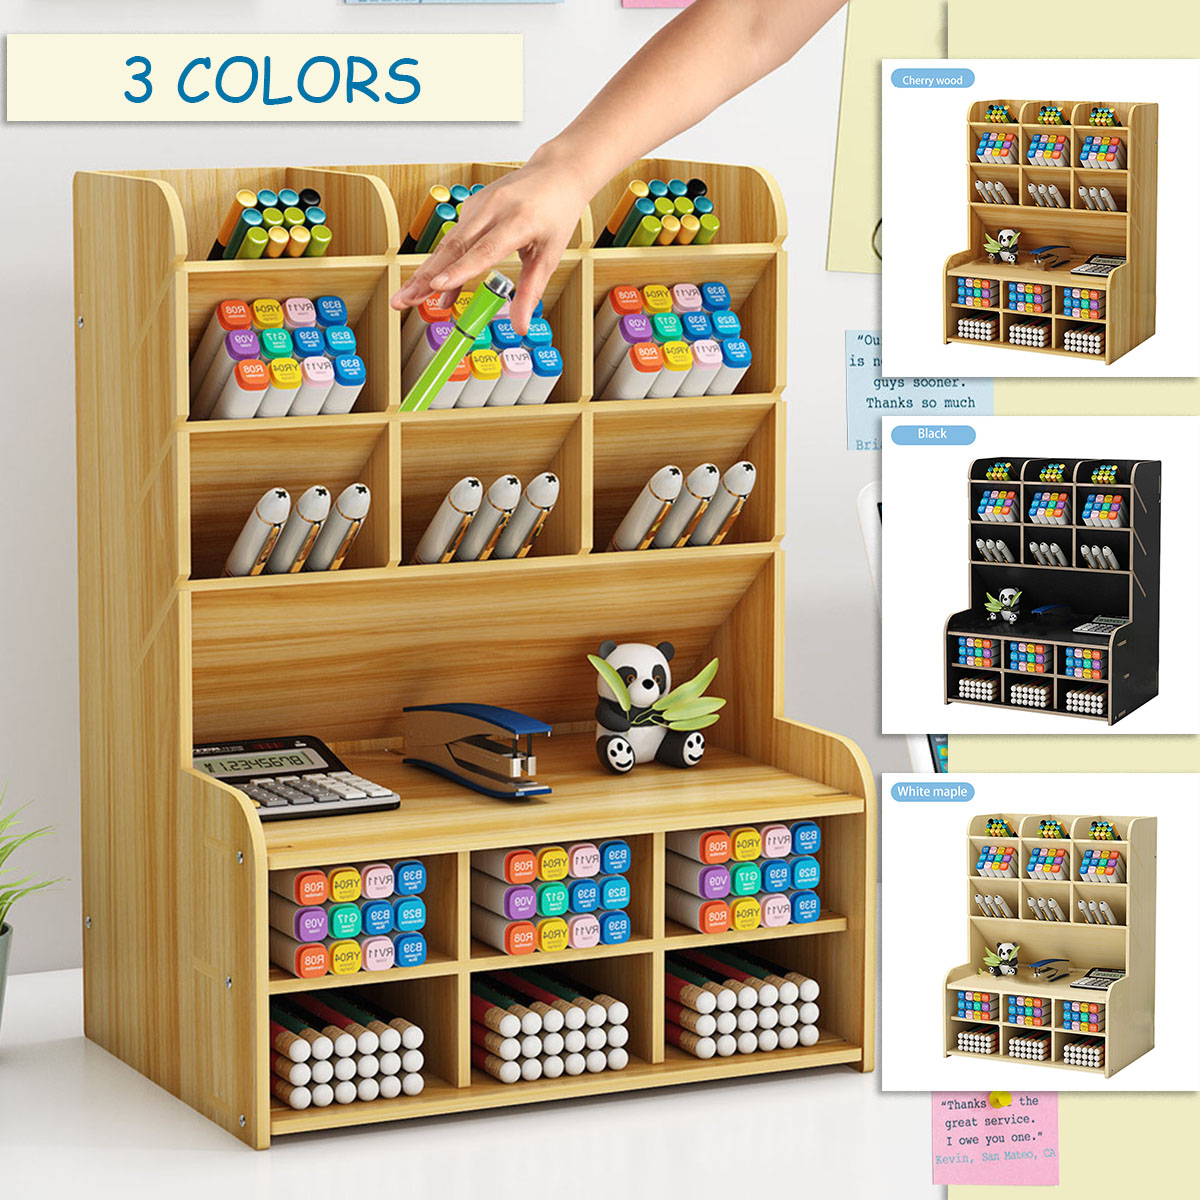 Wooden-Pencil-Pen-Storage-Box-Tilting-Desktop-Stationary-Holder-Organizer-Home-Office-Supplies-Stora-1745793-1